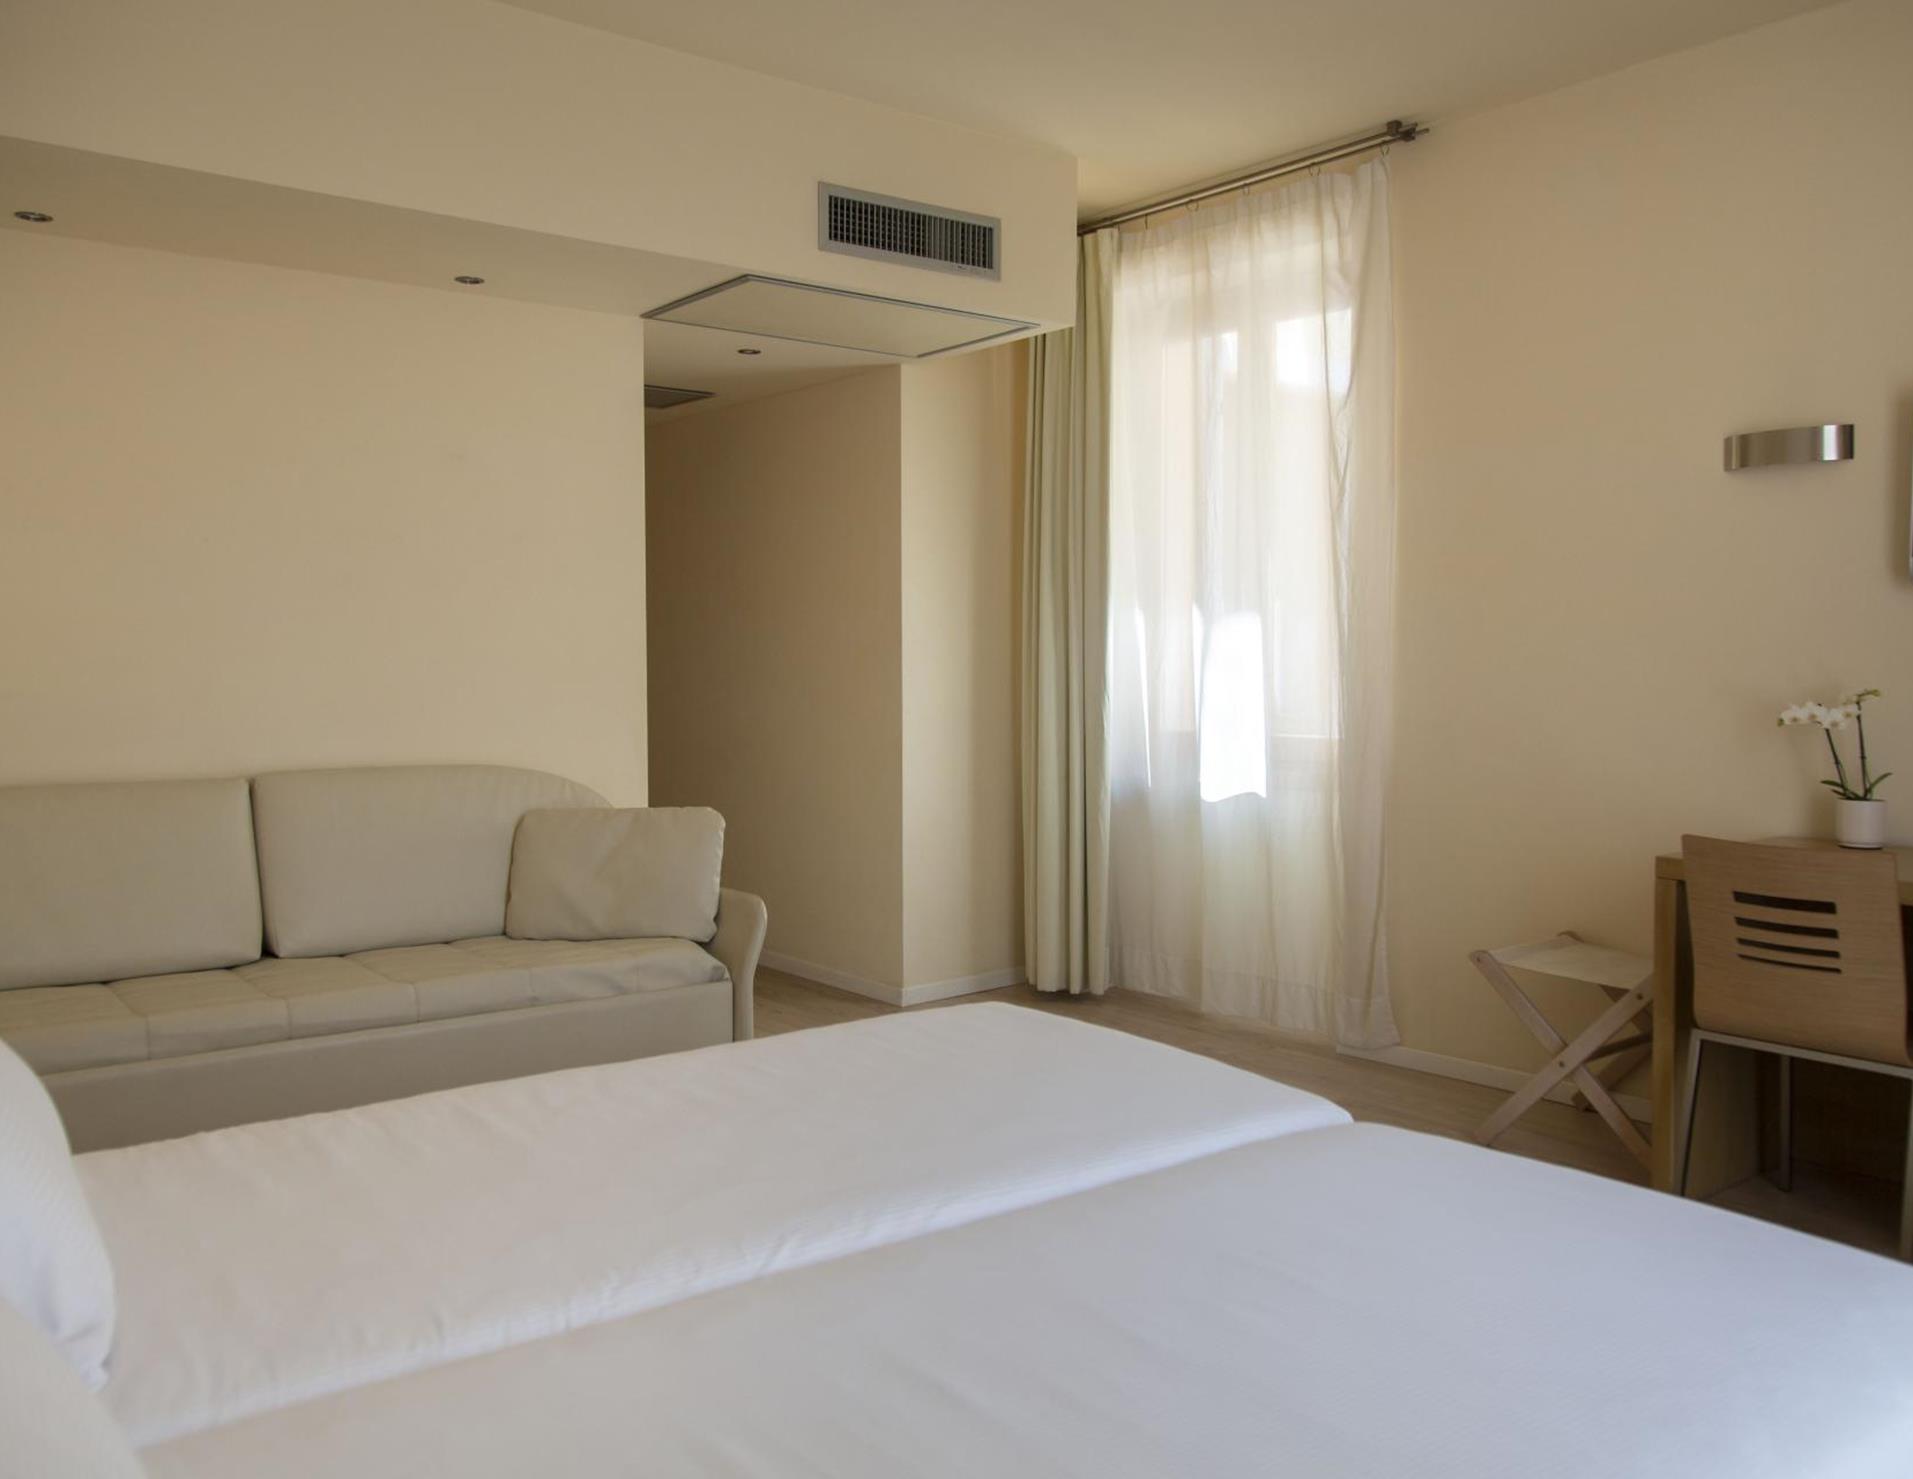 Hotel Antico Borgo - Room 4